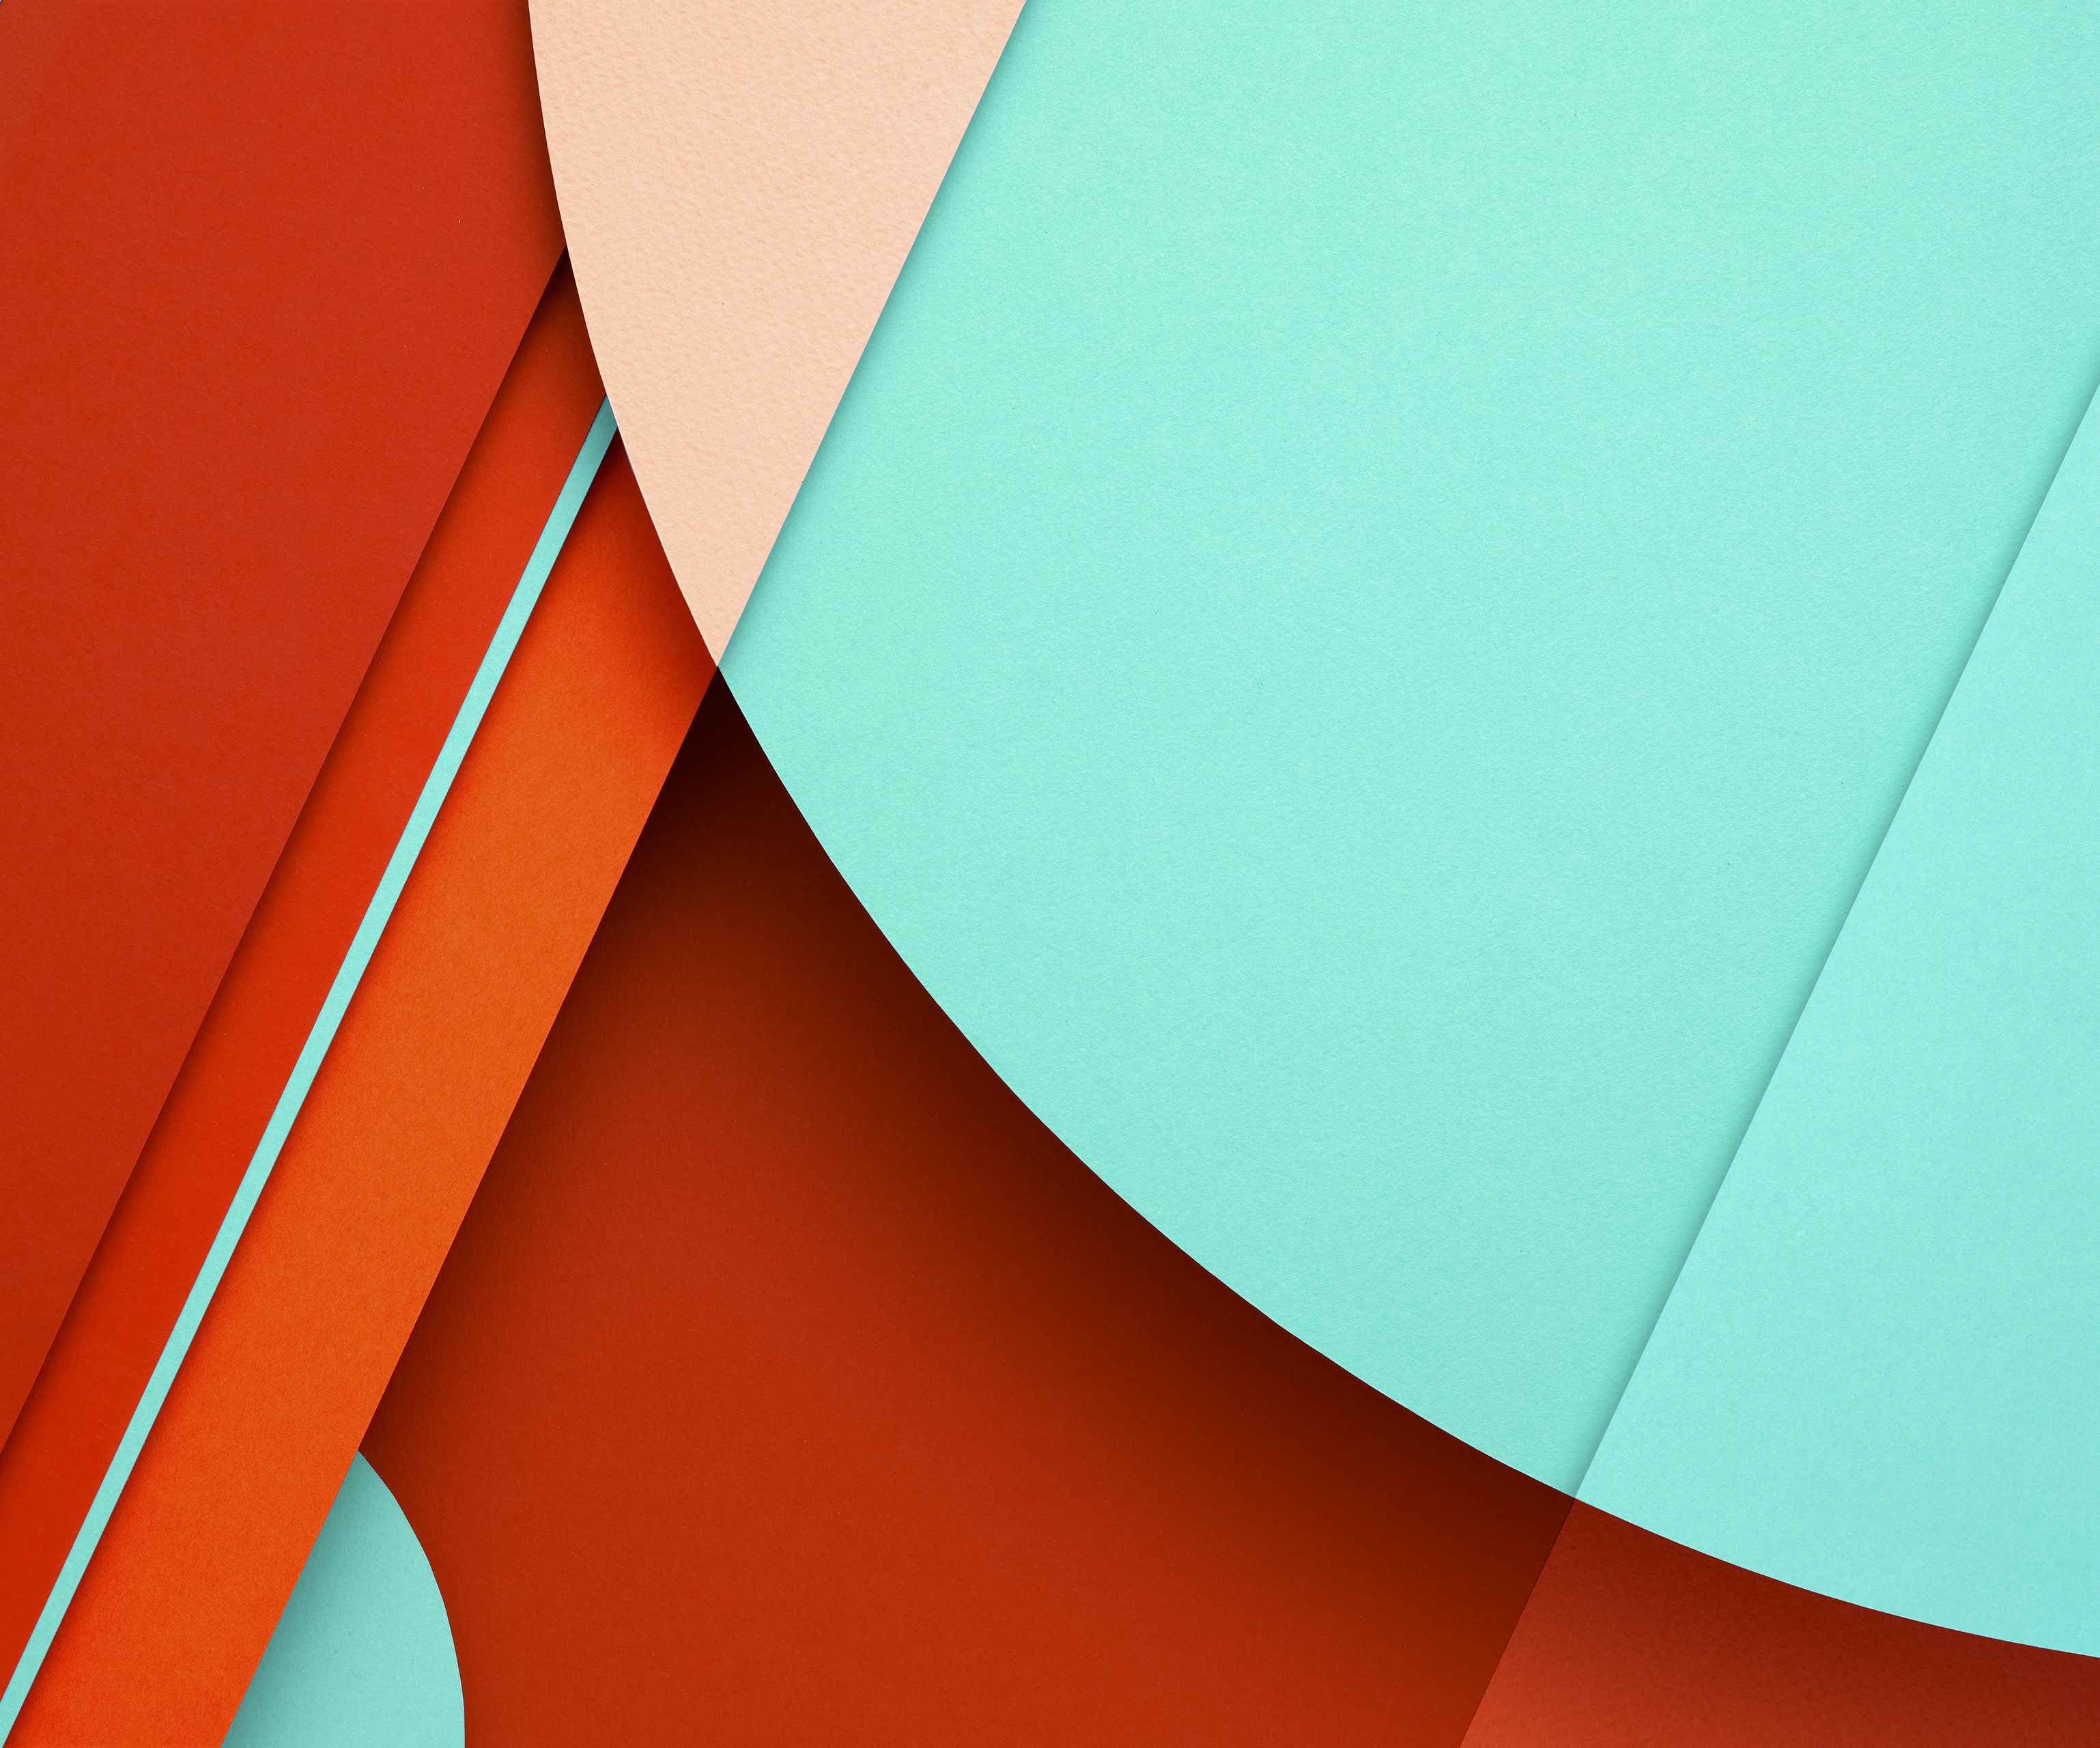 Nexus 7 Android 5 0 Lollipop Wallpaper Gizmo Bolt Exposing Technology Social Media Web